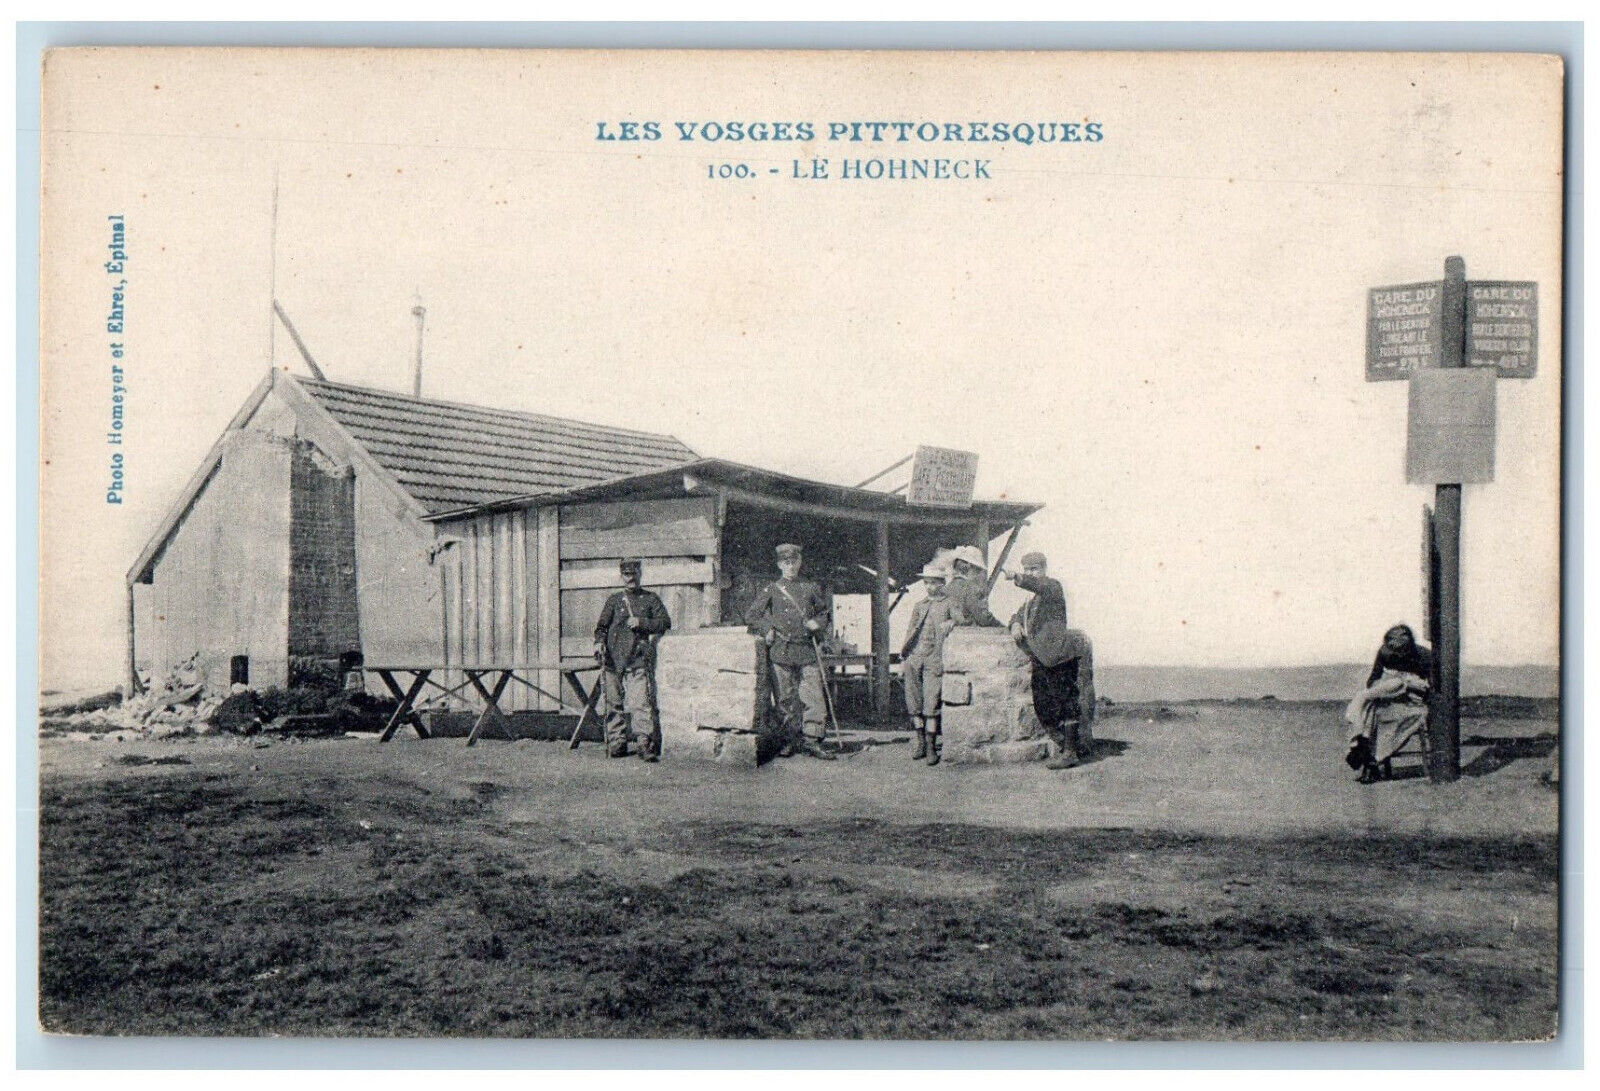 Picturesque Vosges Grand Est Northeastern France Postcard The Hohneck c1910